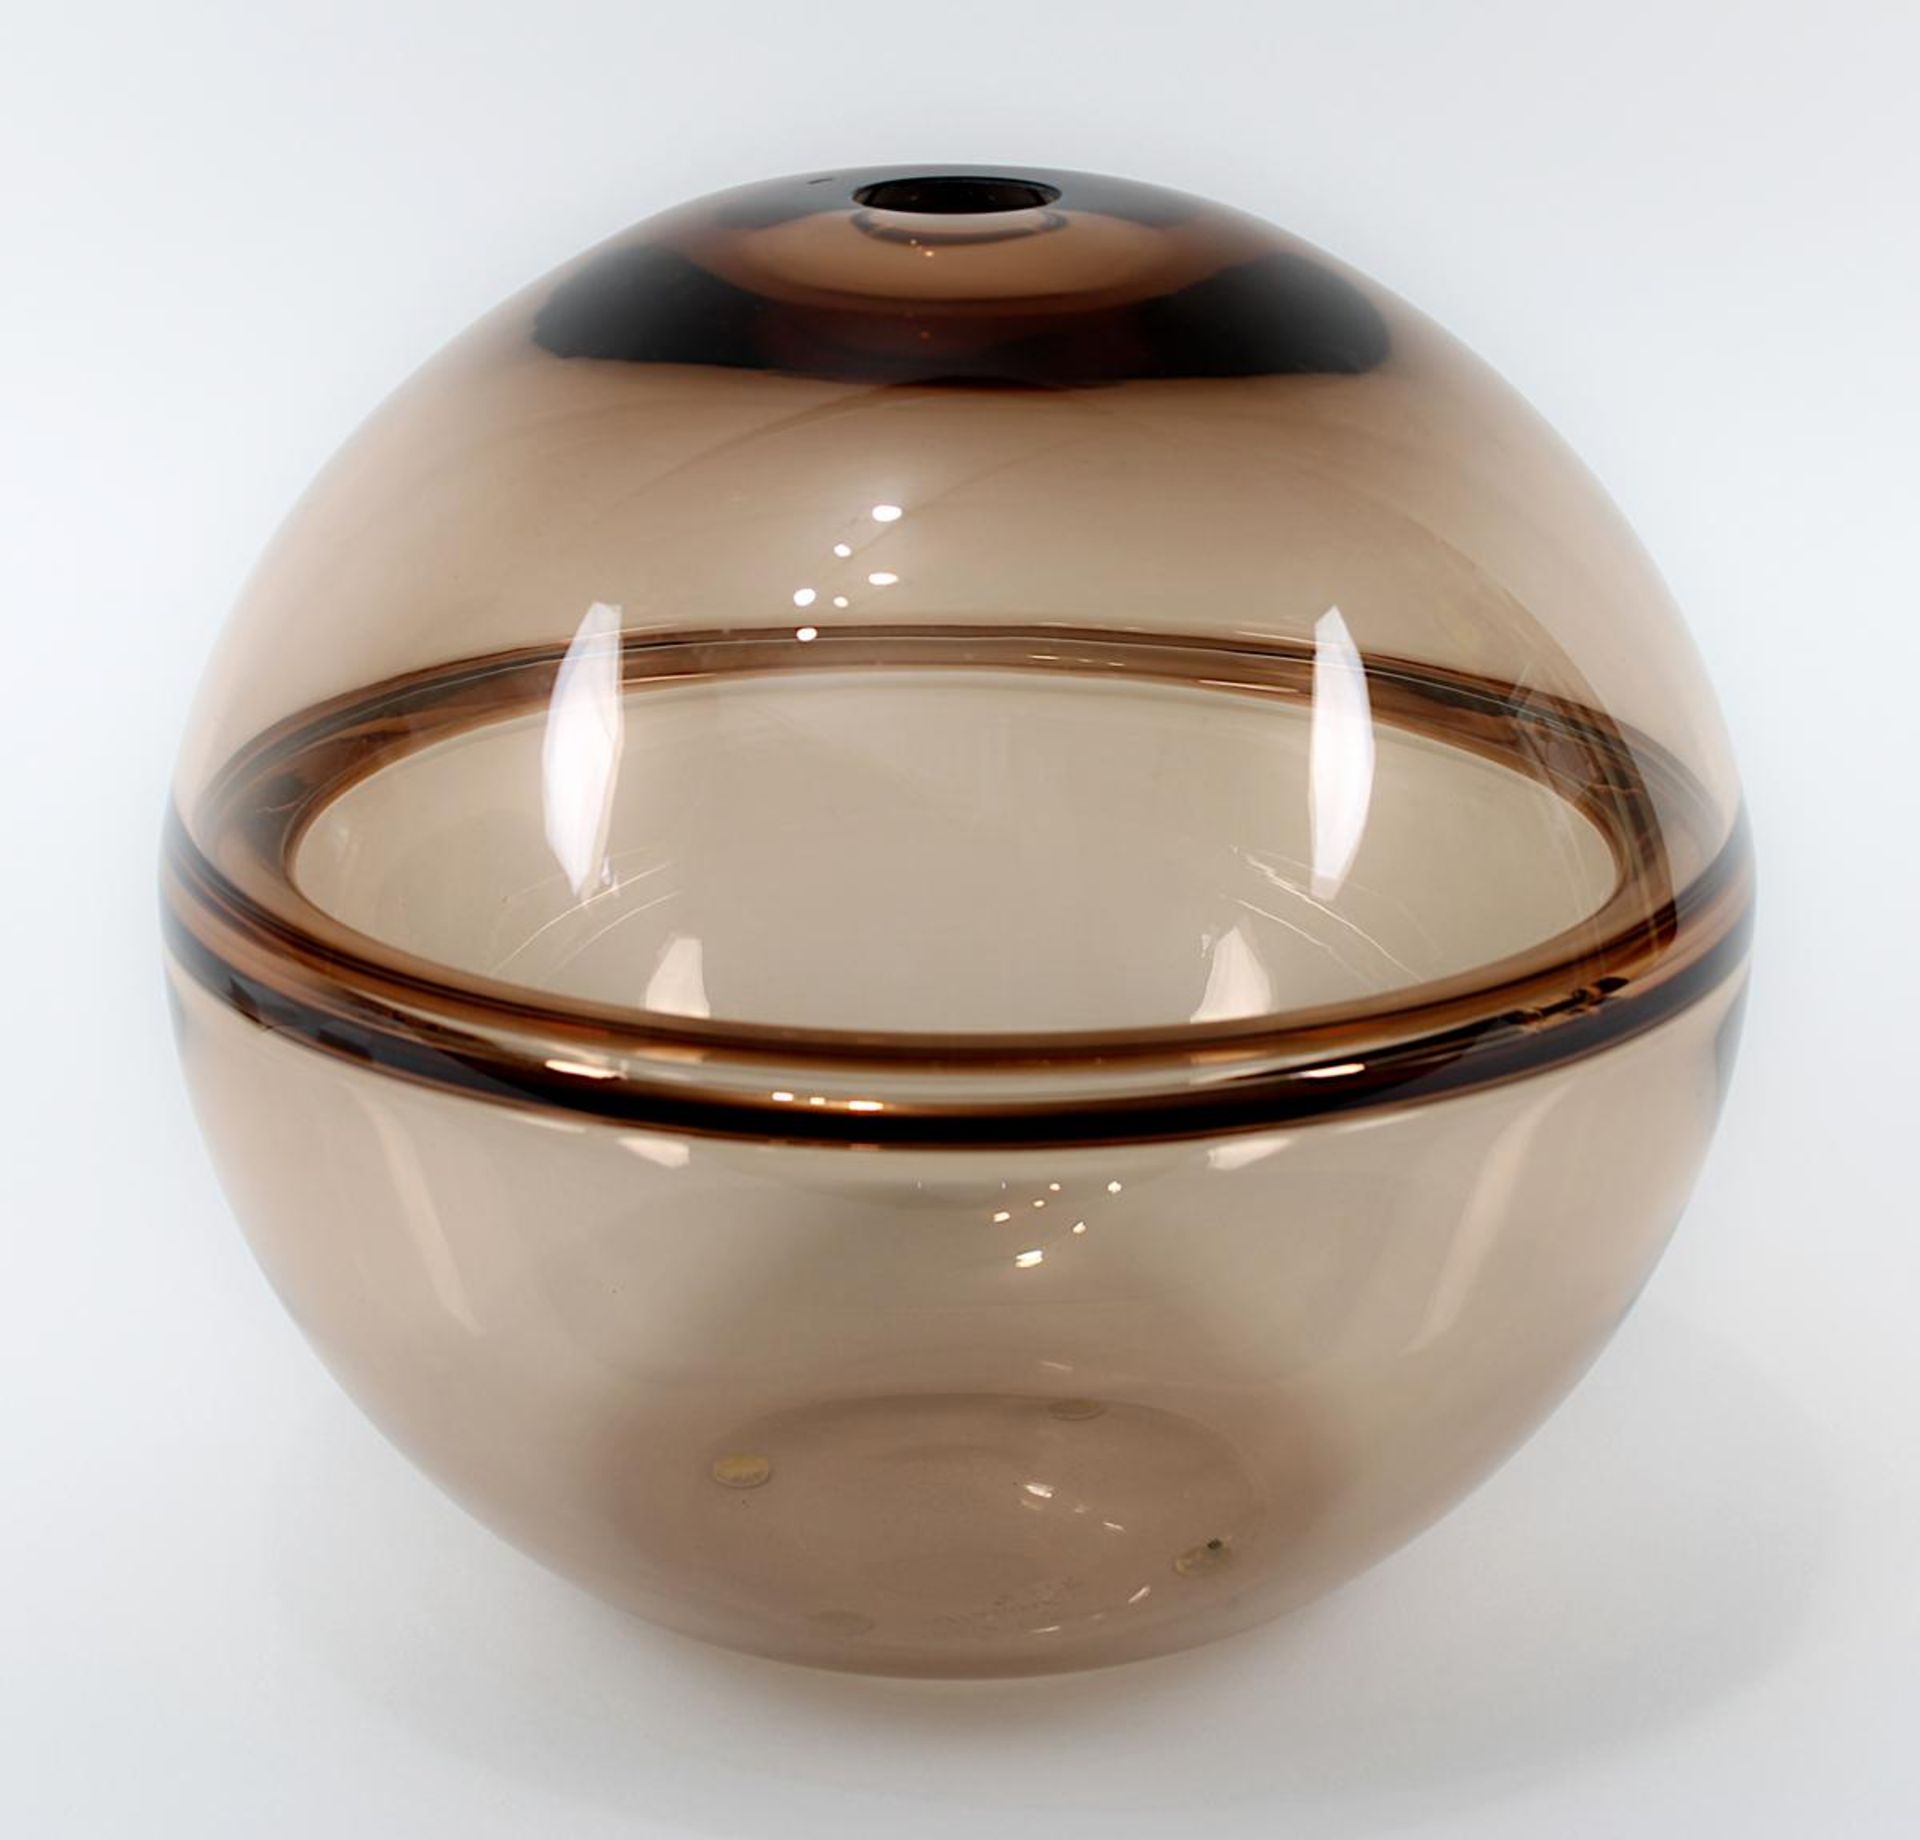 Paolo Crepax - Kugelvase, Murano 2015, kugelförmige Vase aus braunem Rauchkristallglas, mittig